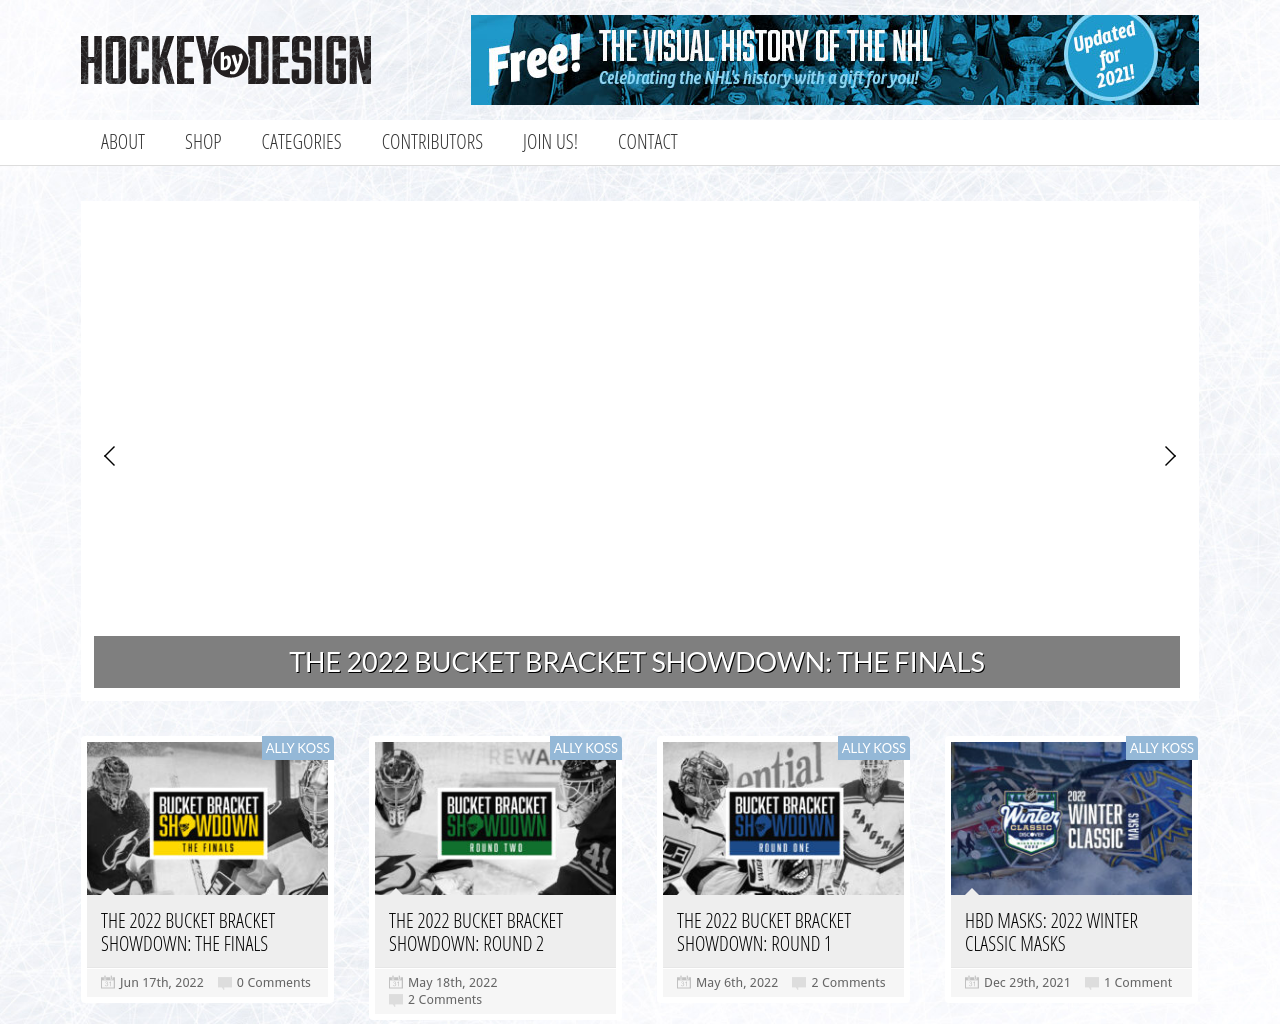 hockeybydesign.com